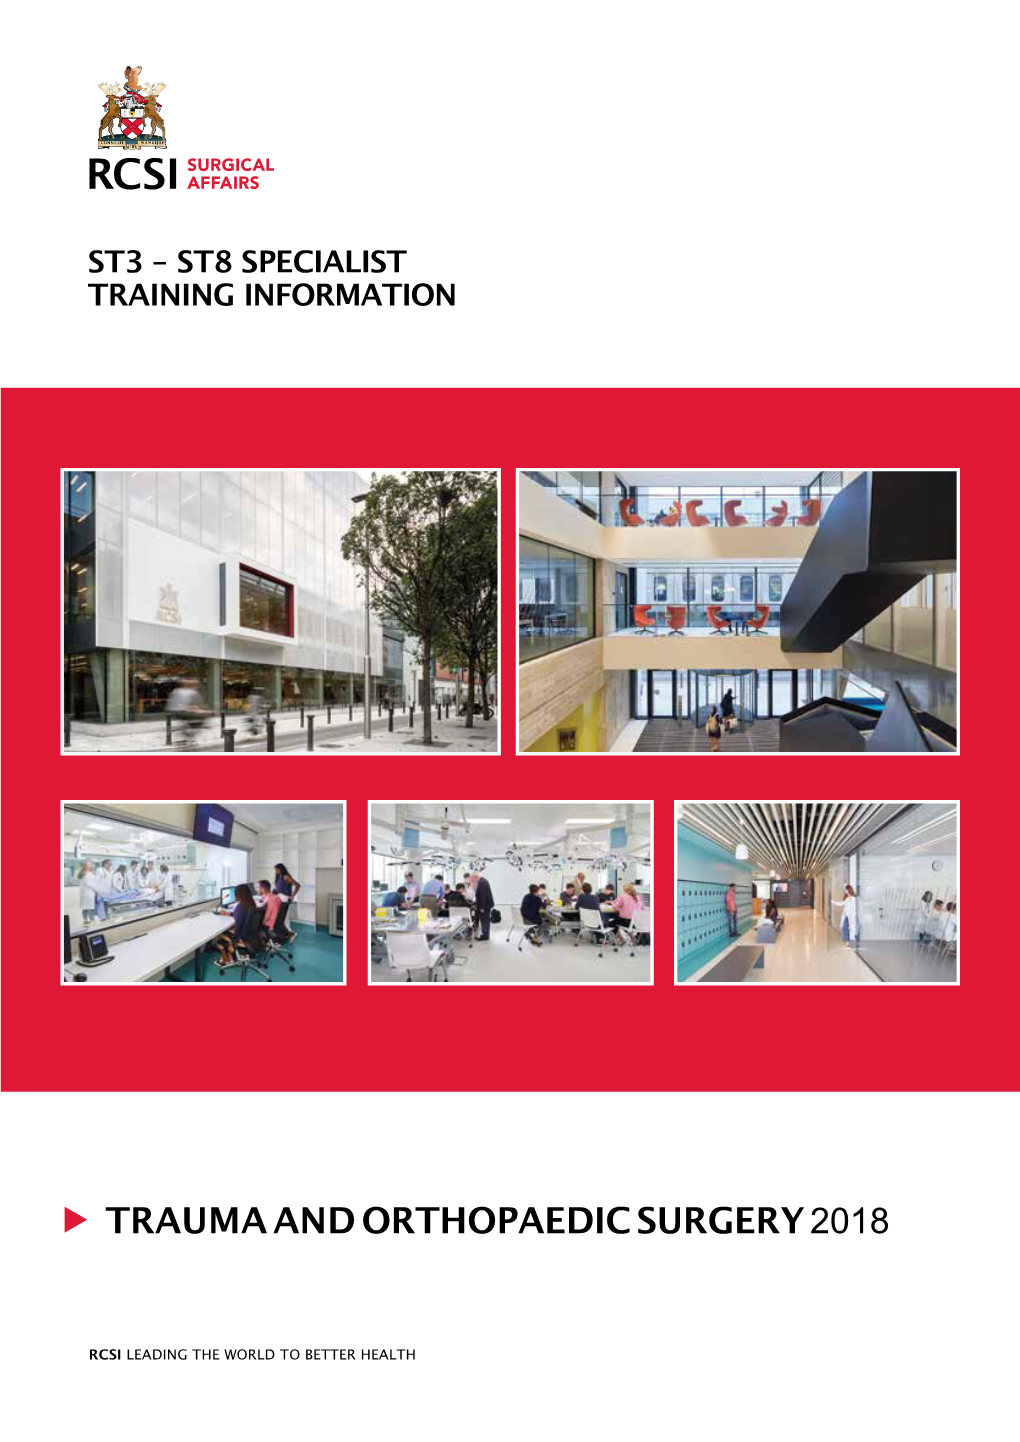 Trauma and Orthopaedic Surgery 2018